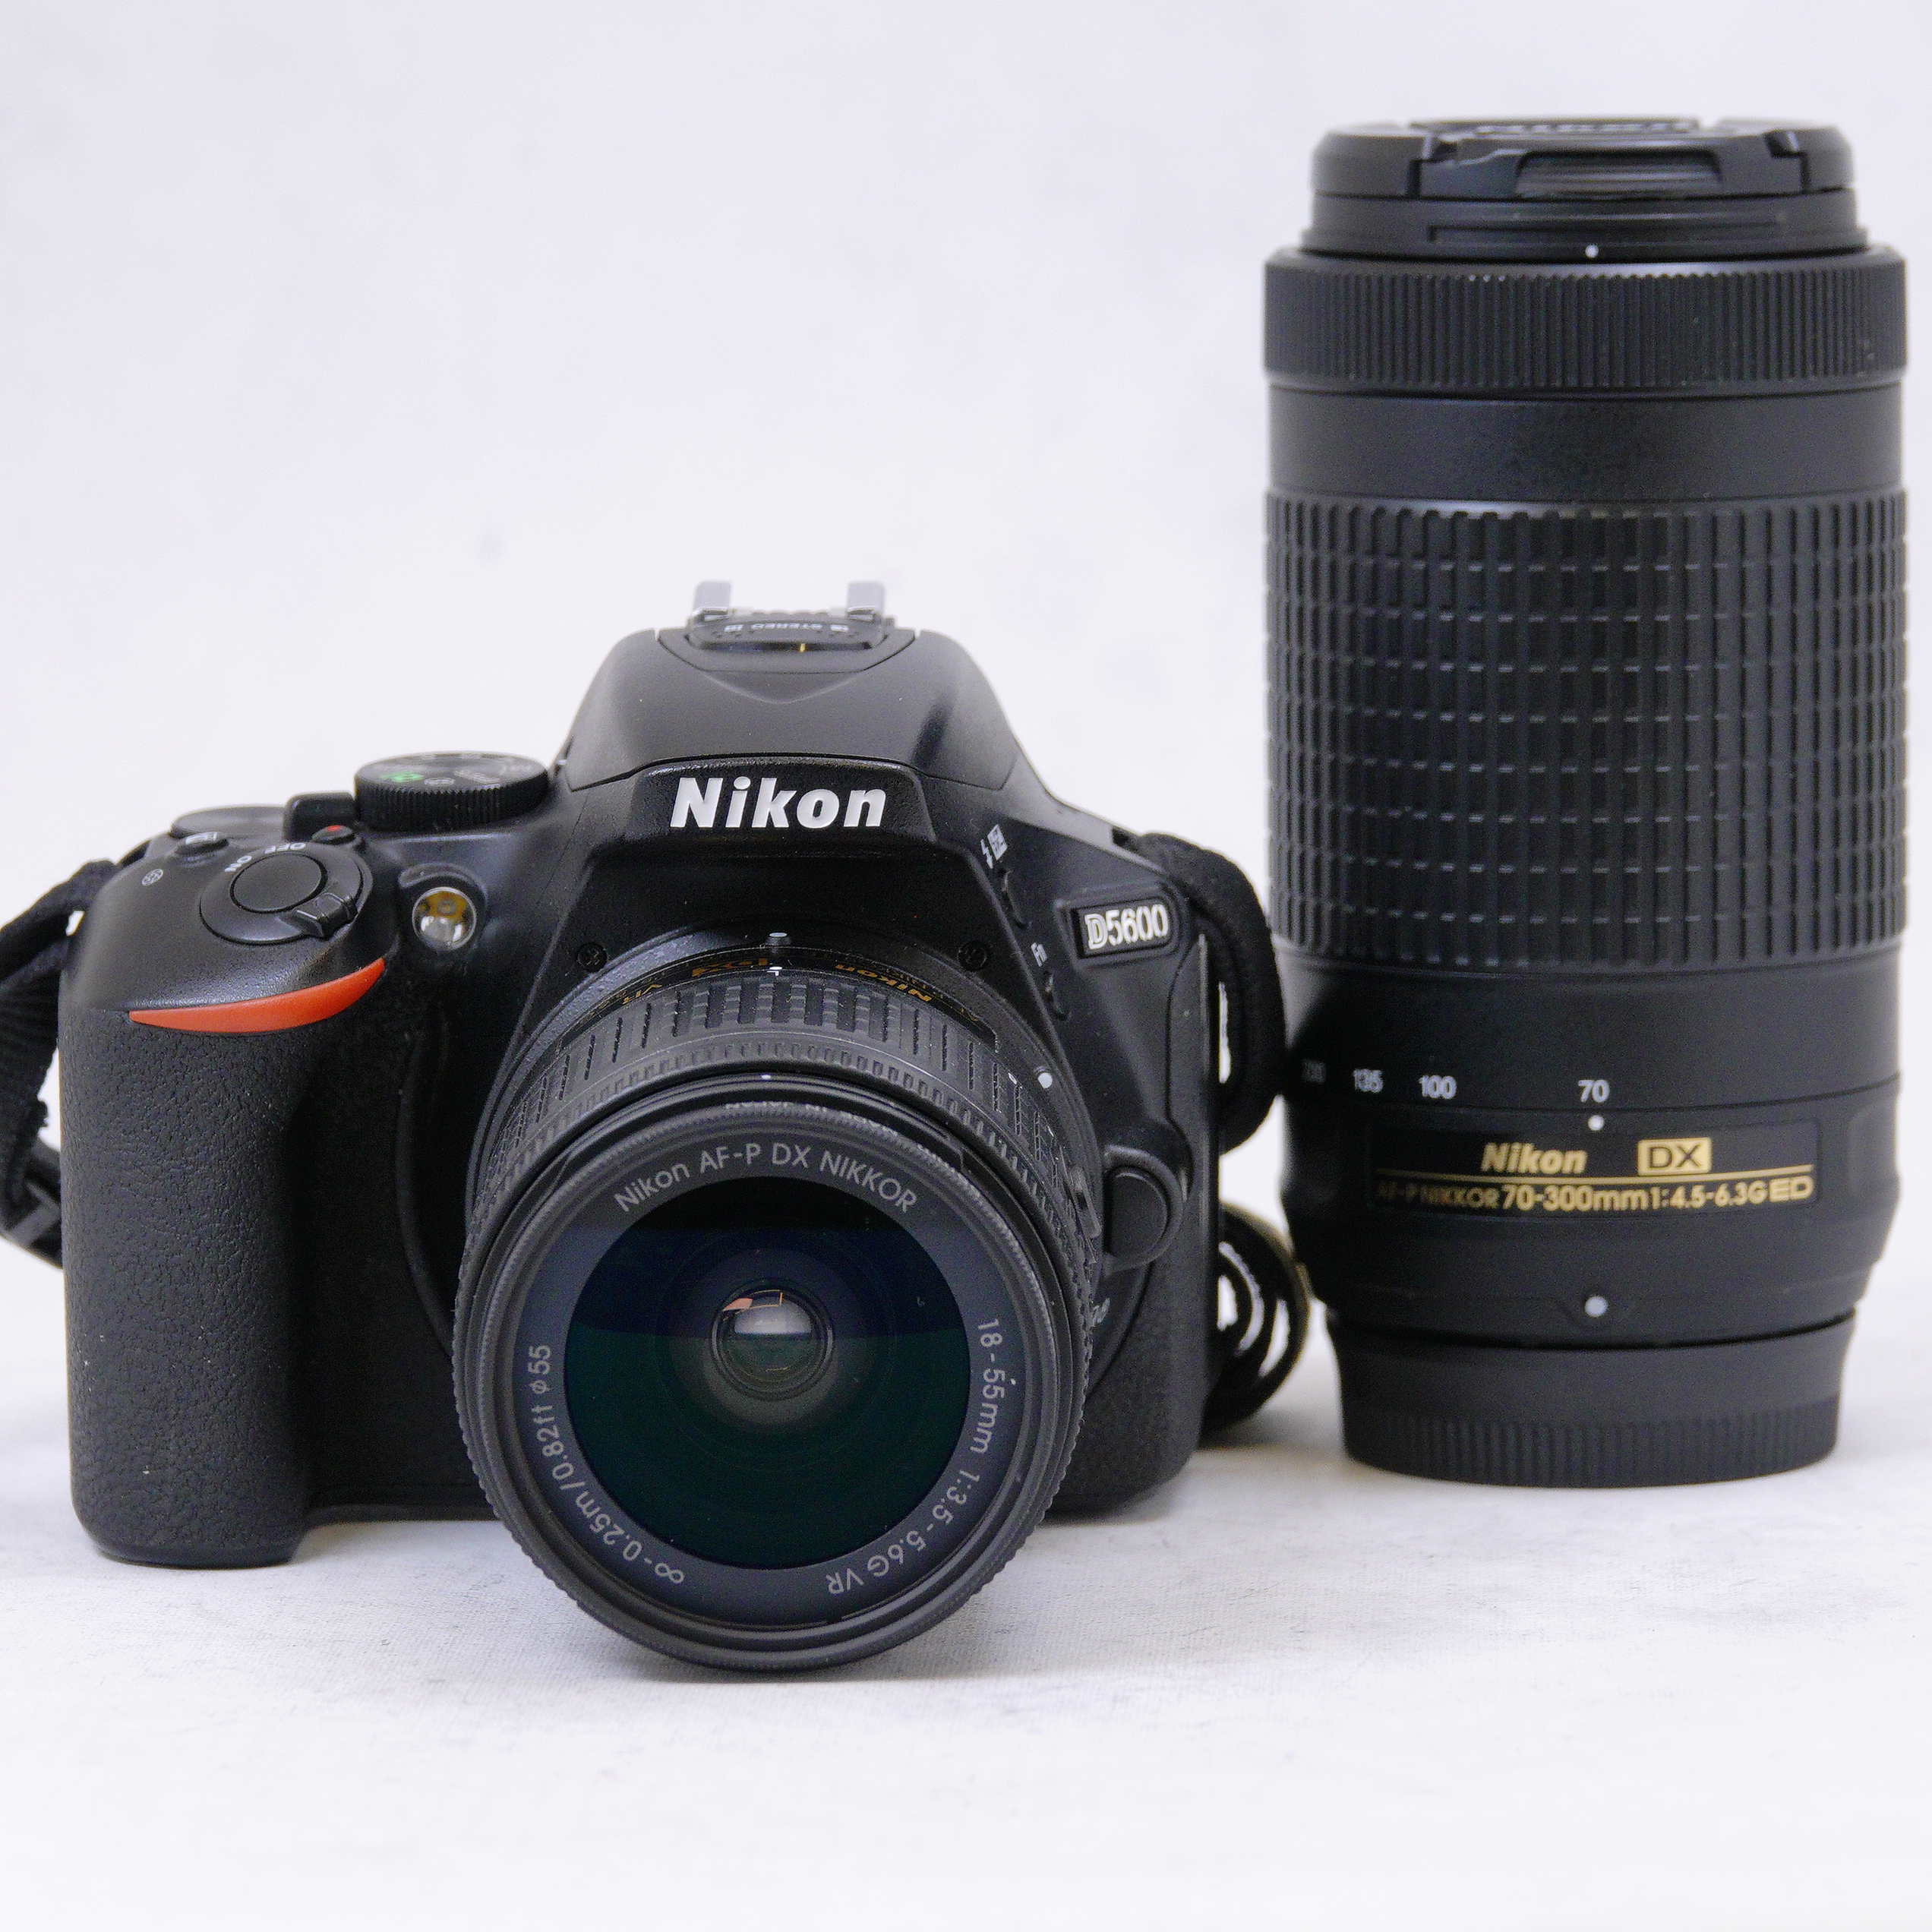 Nikon D5600 - Cámara réflex digital SLR y lente DX AF-P 18-55 mm VR